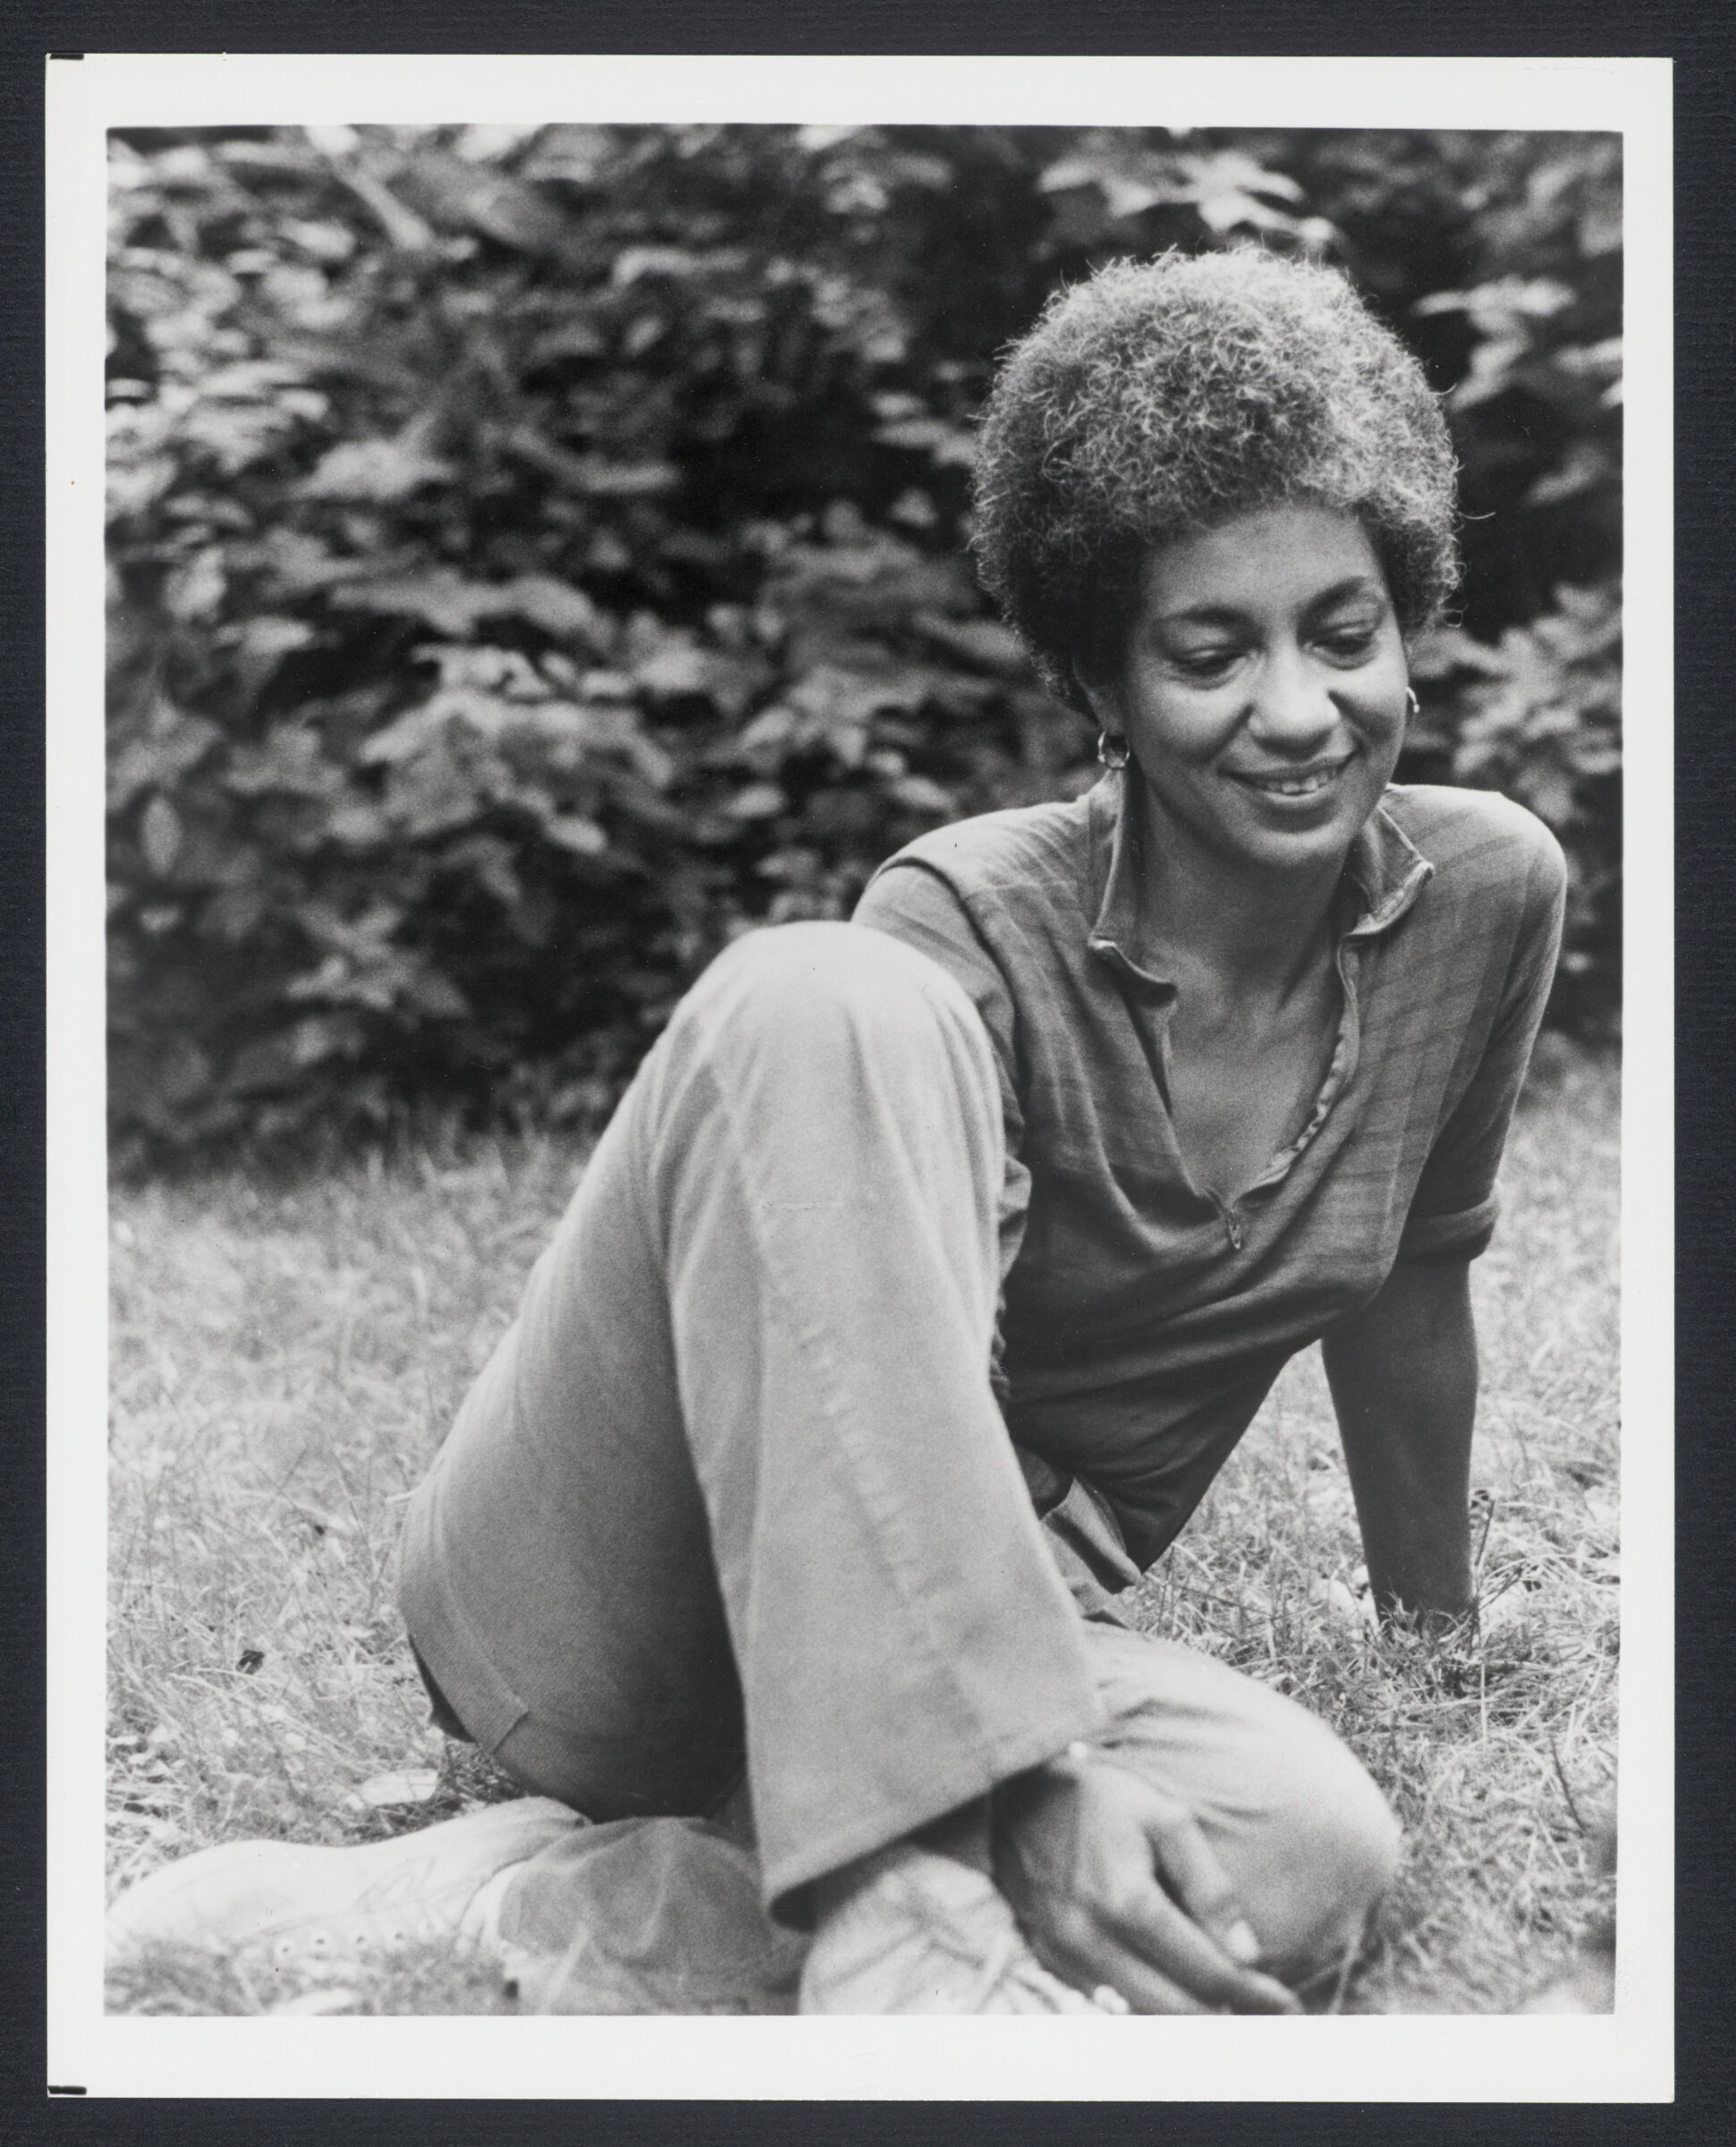 Portrait of June Jordan seated outdoors in grass, c.1970-1975